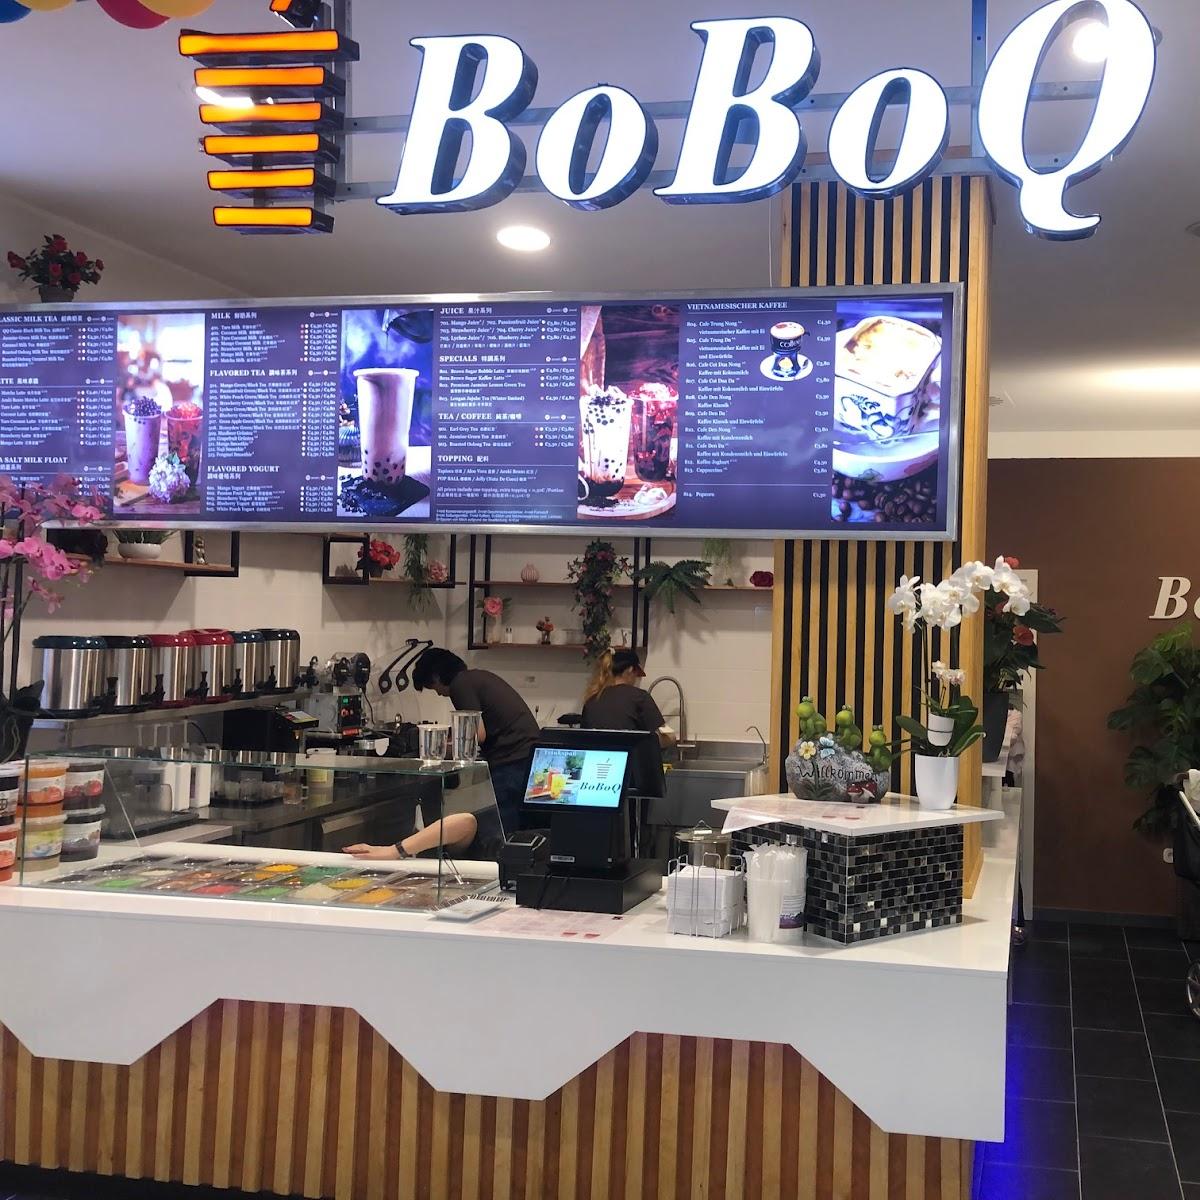 Restaurant "BoBoQ" in Dallgow-Döberitz